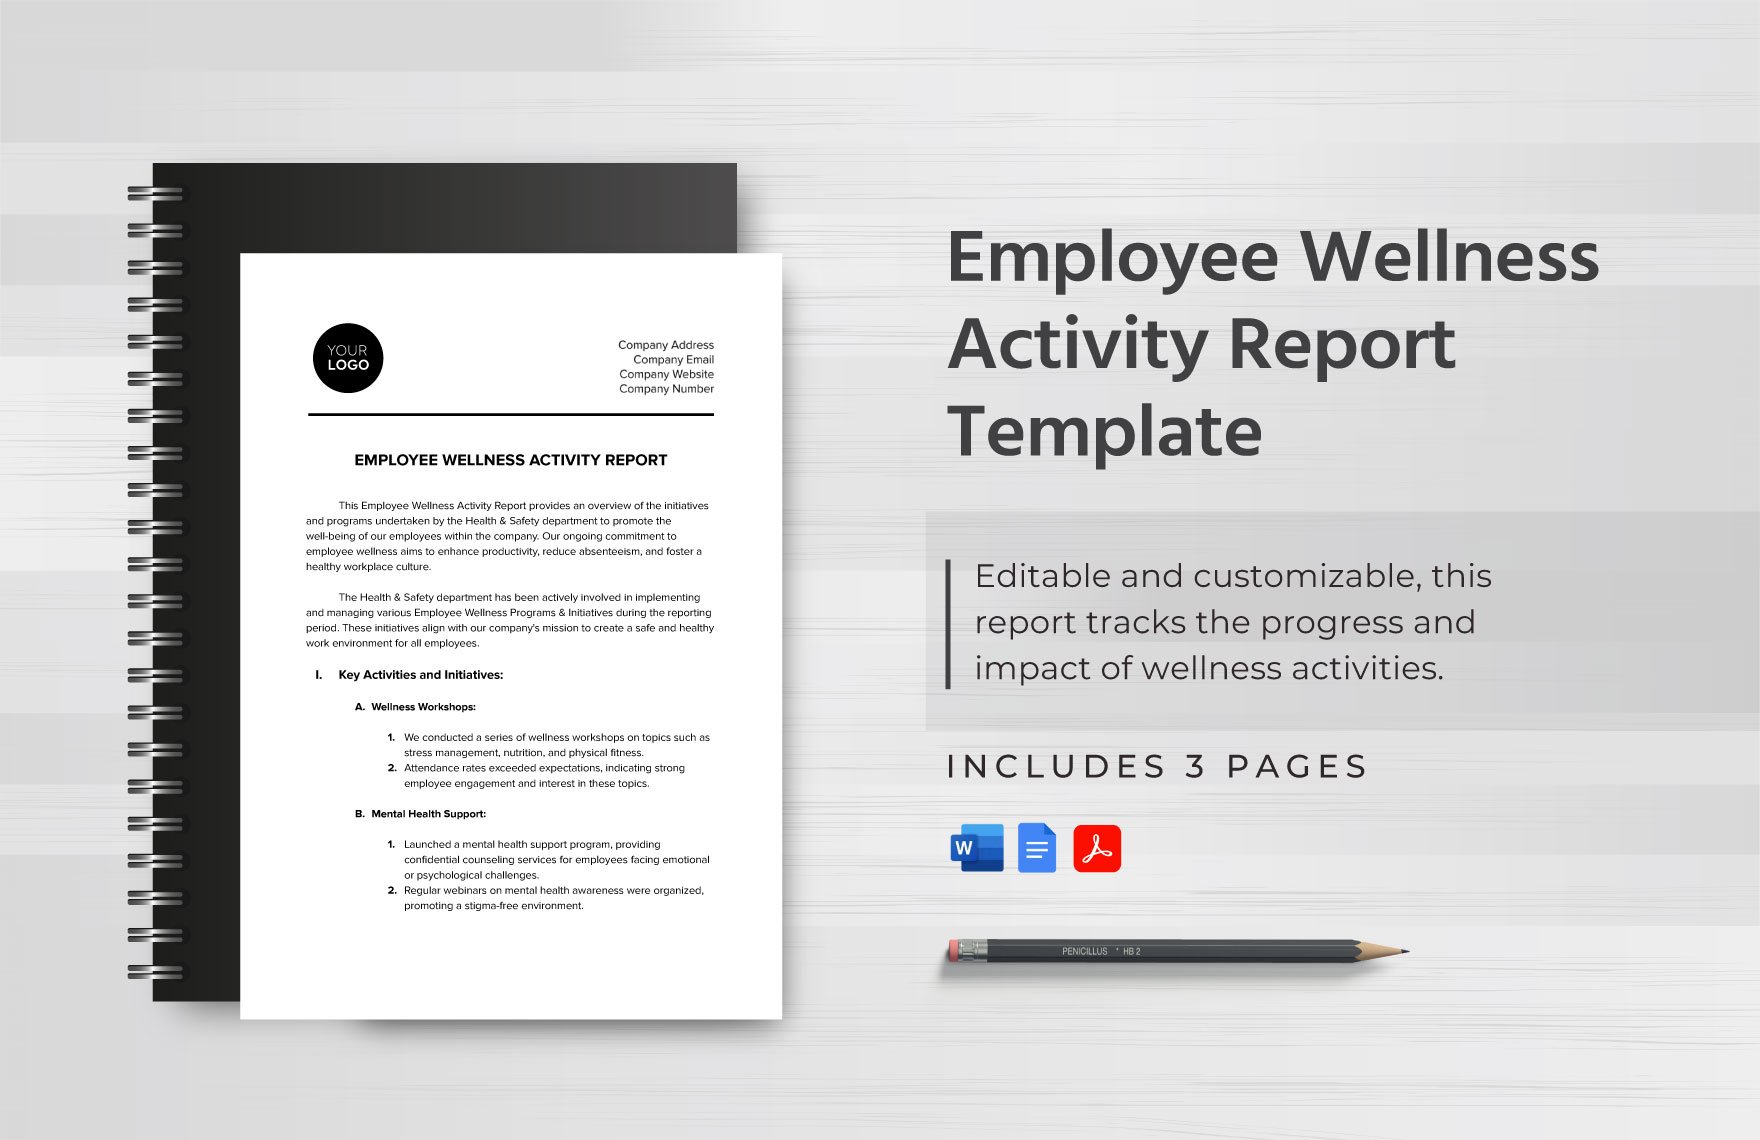 Employee Wellness Activity Report Template